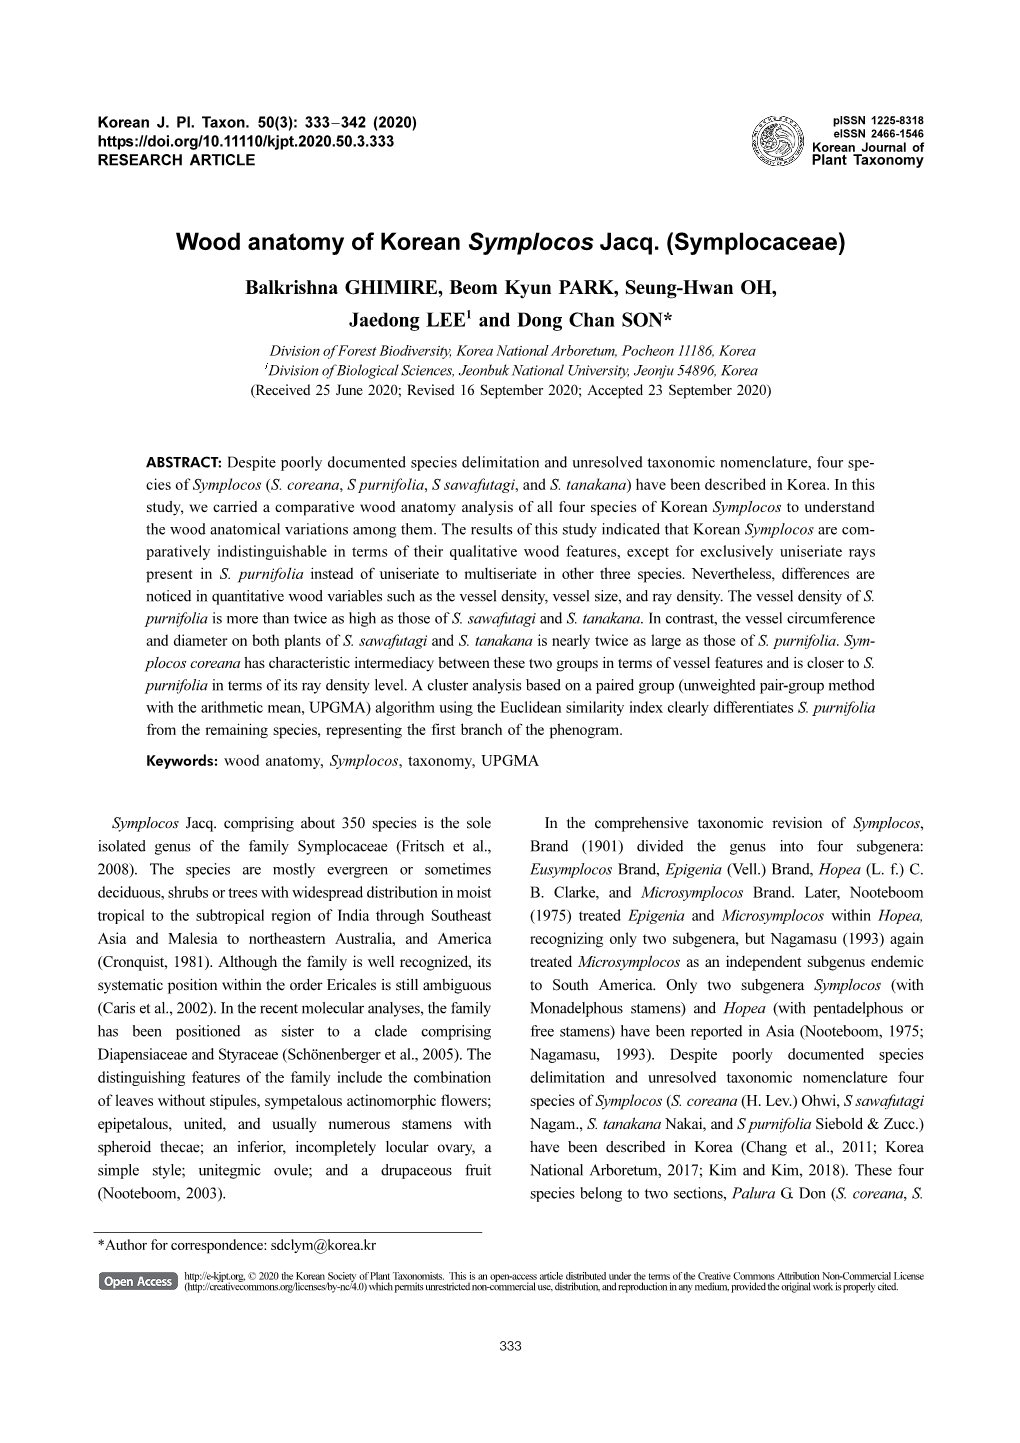 Wood Anatomy of Korean Symplocos Jacq